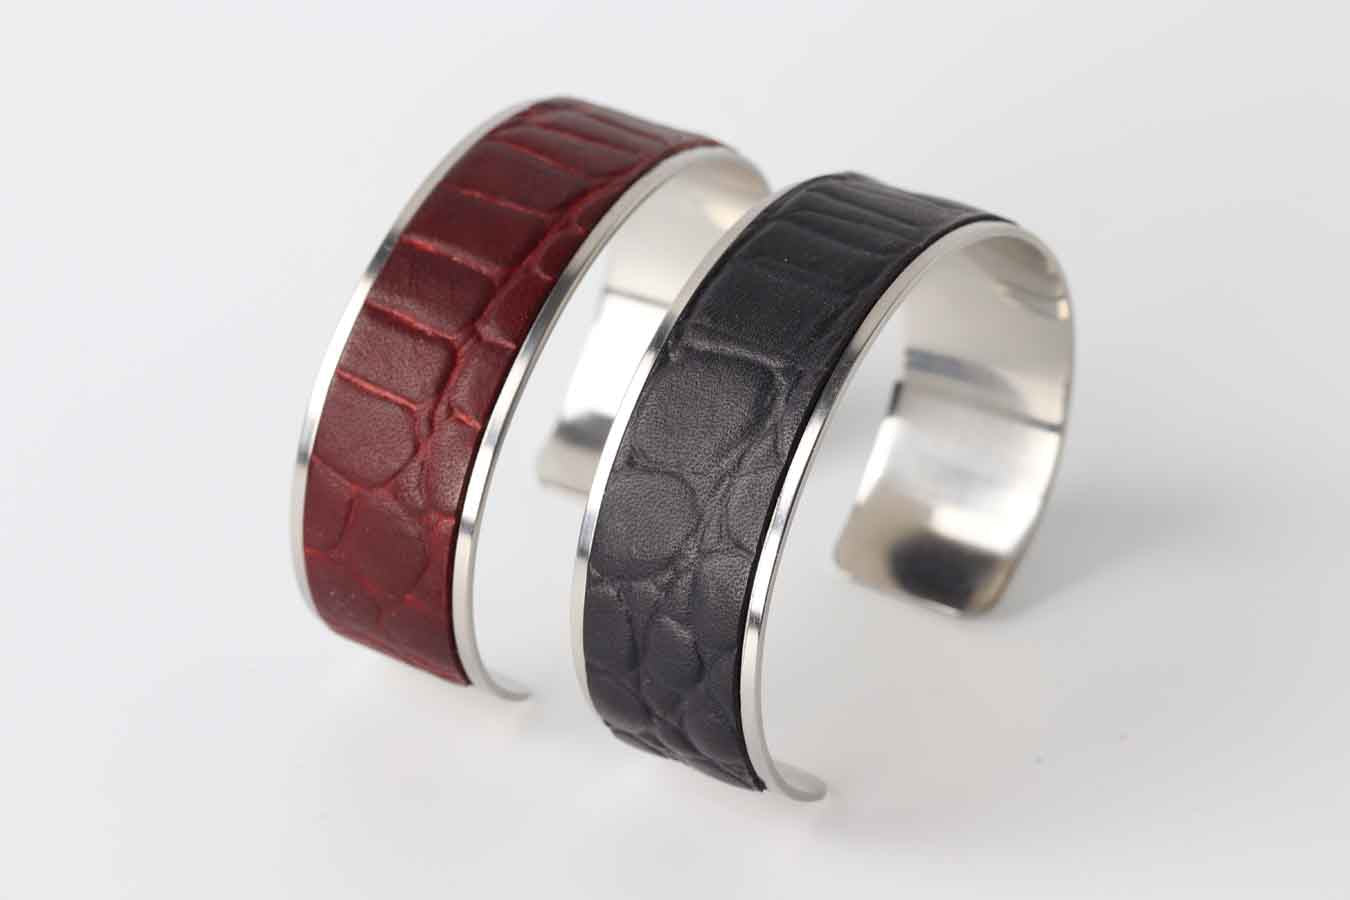 Cuff Bracelets for Women and Men